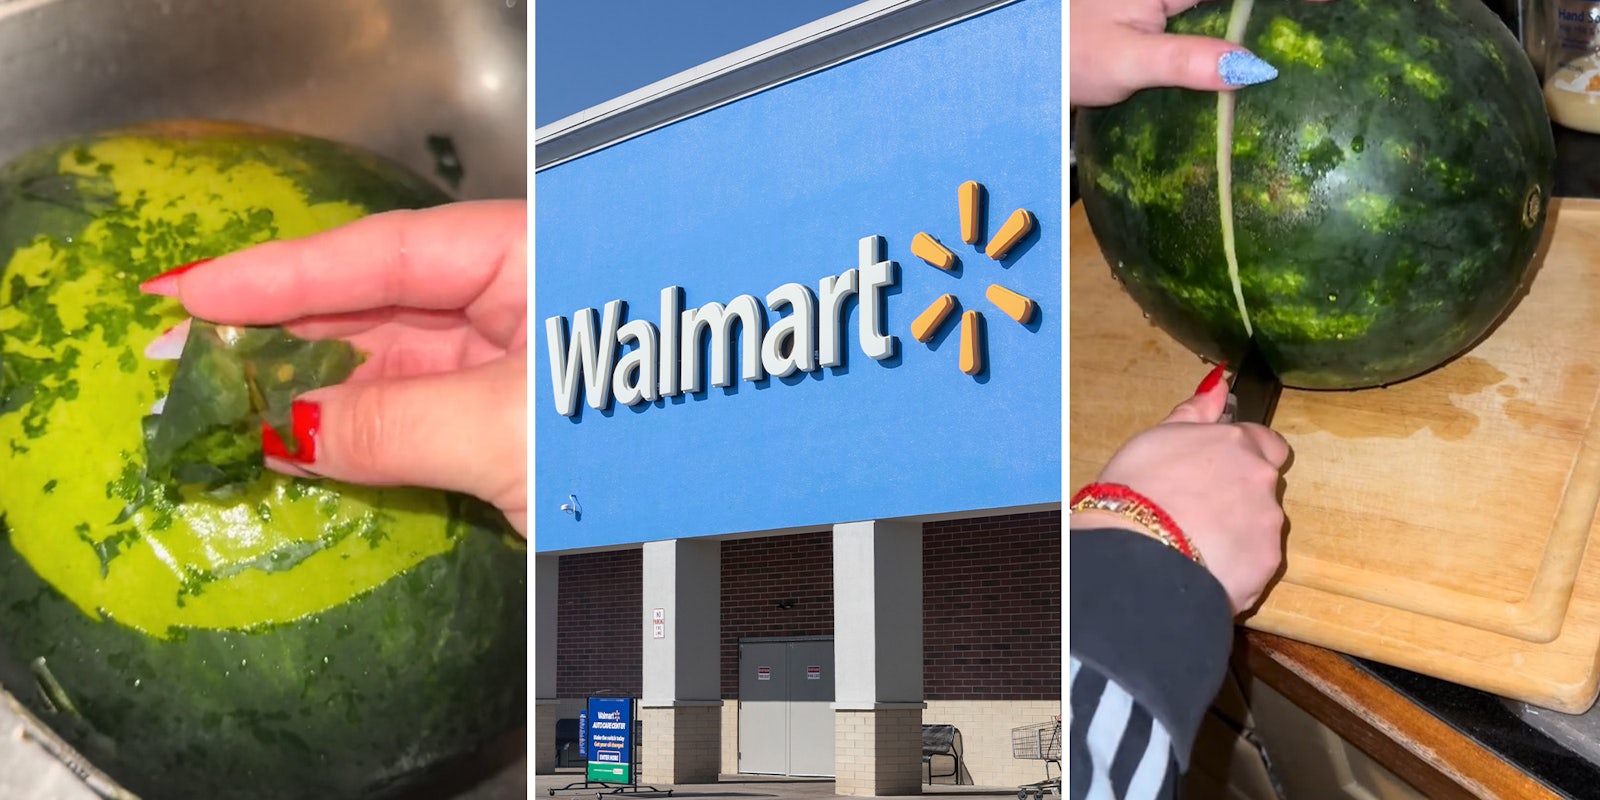 Customer rinses watermelon from Walmart